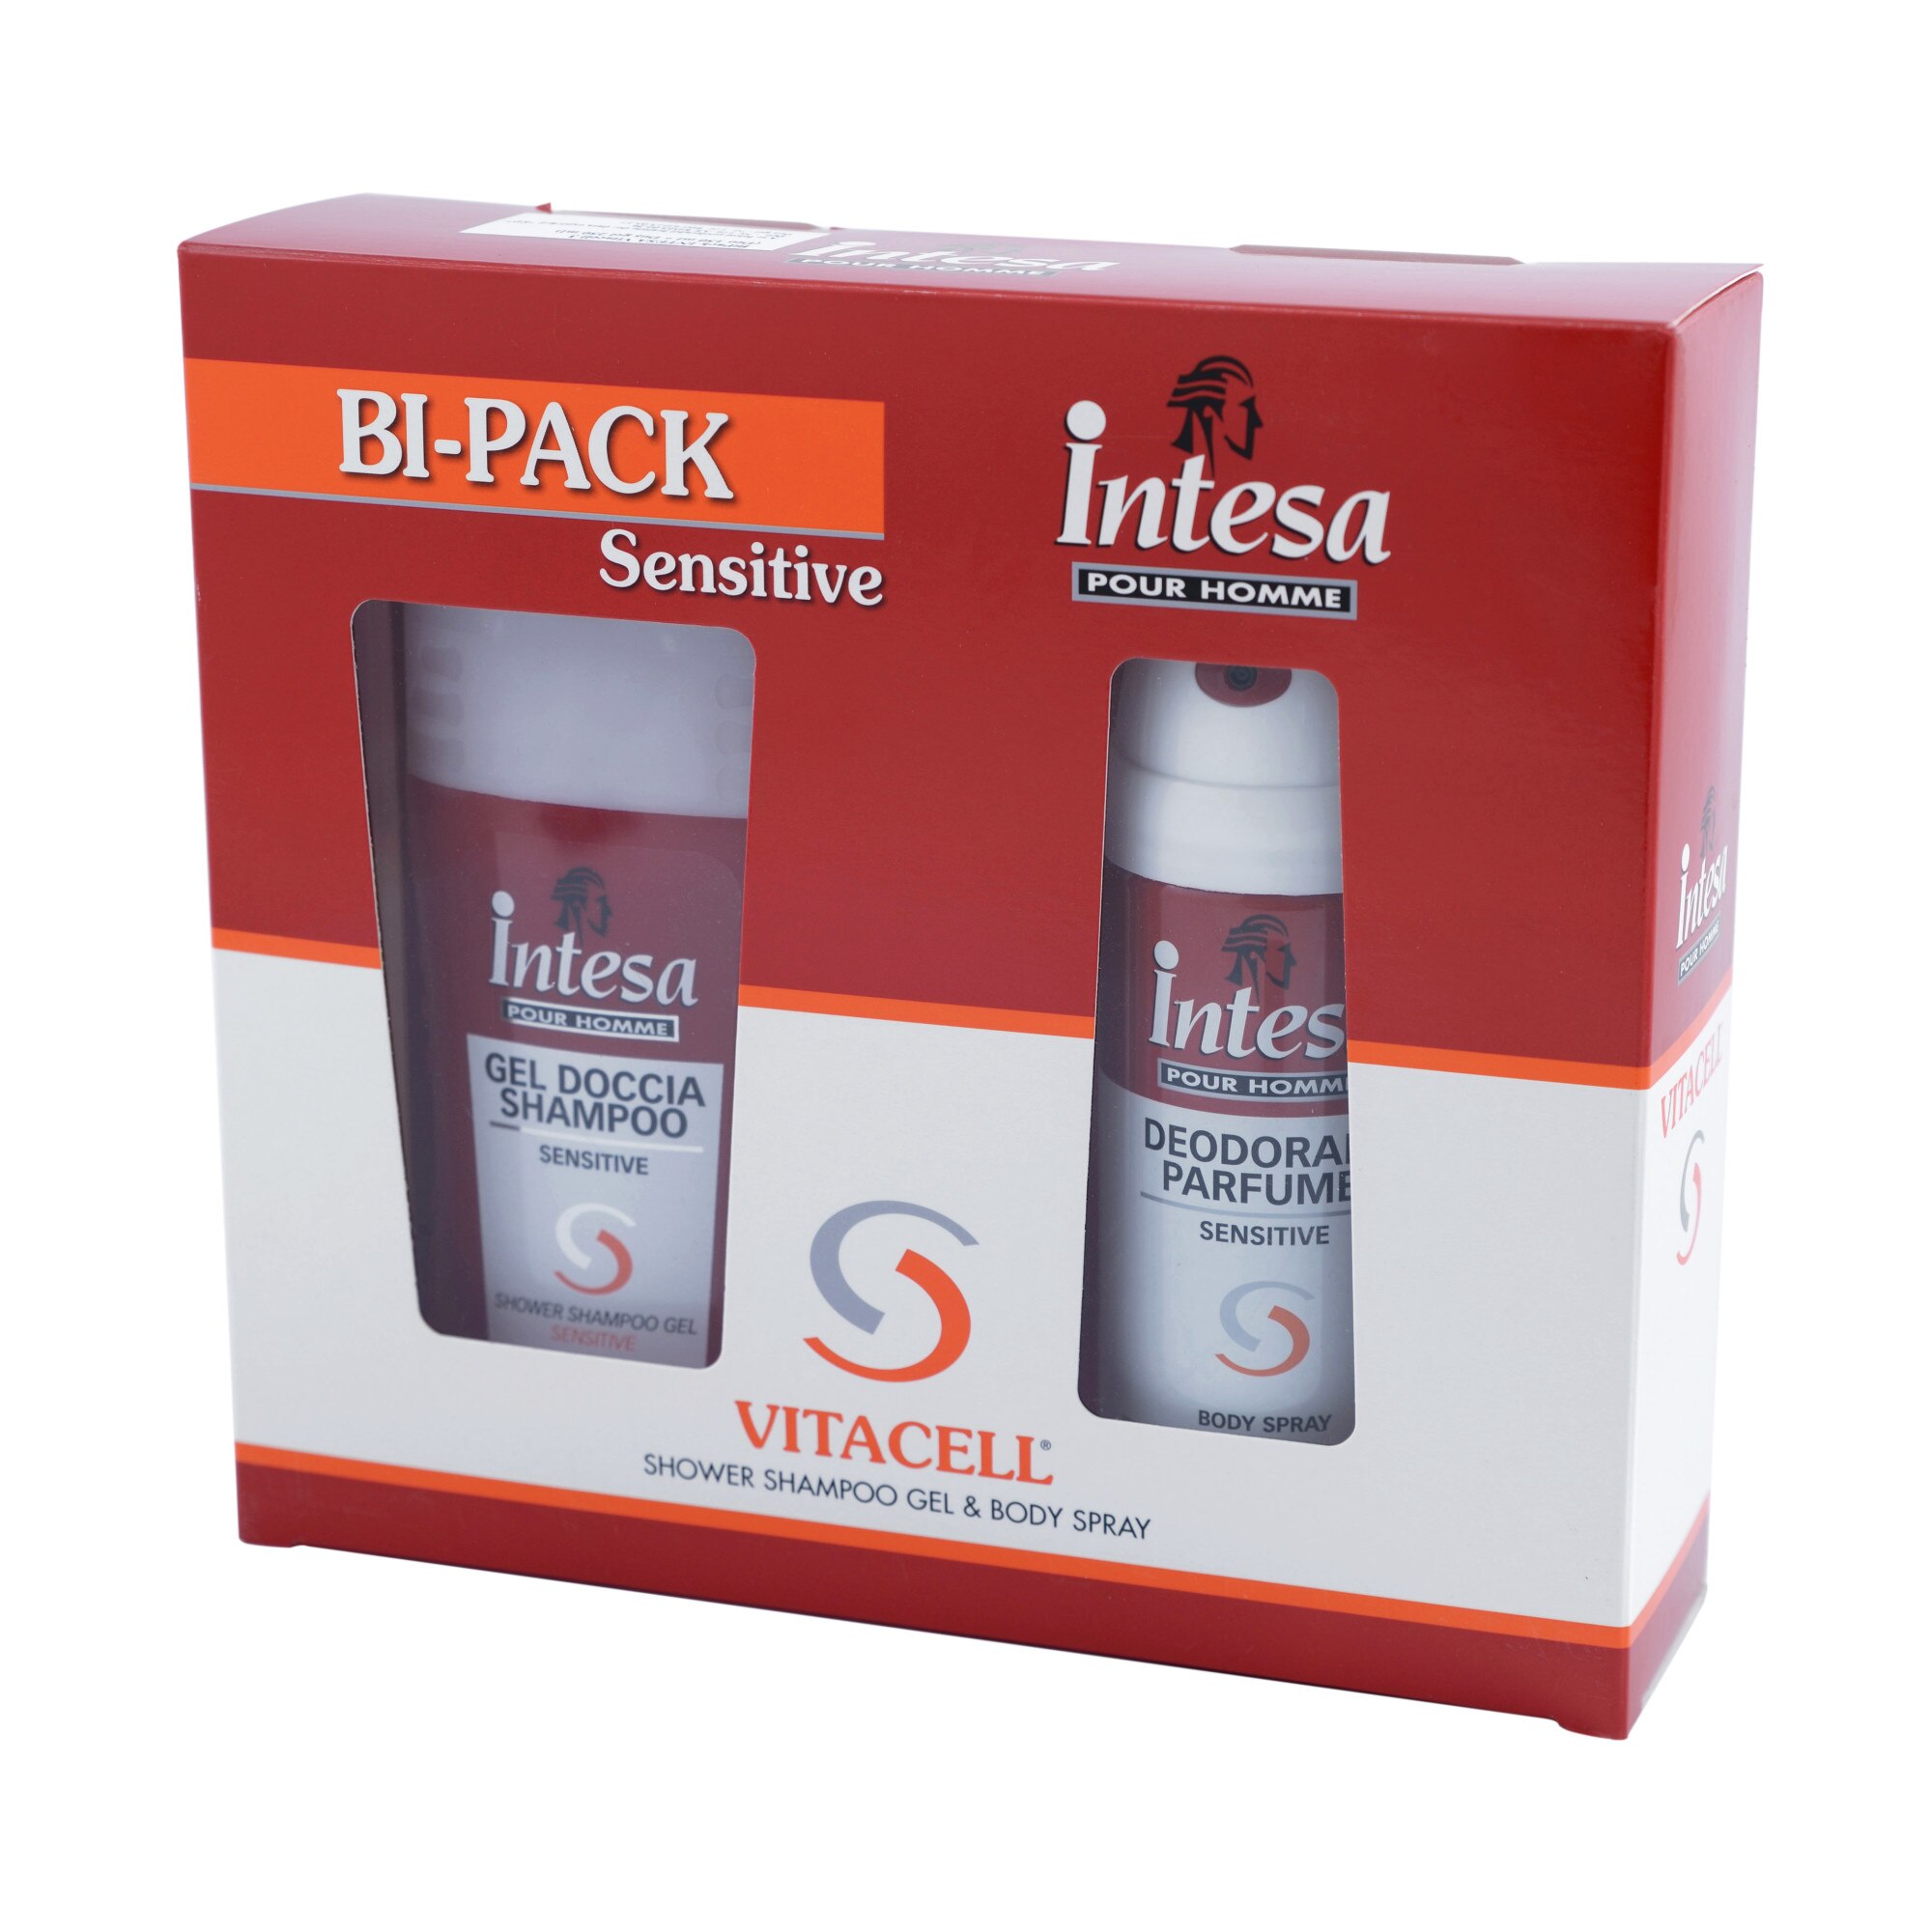 Intesa Pour Homme Gel Doccia Shampoo Sensitive Vitacell 250ml